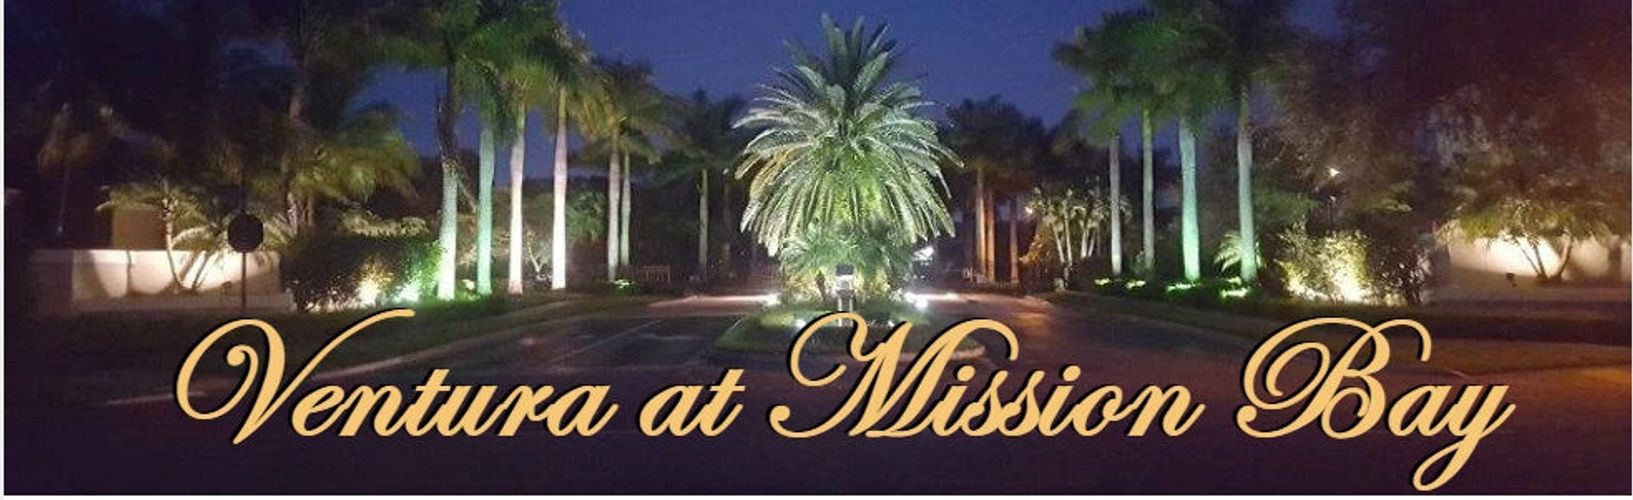 Boca Raton - FL - Mission Bay Plaza